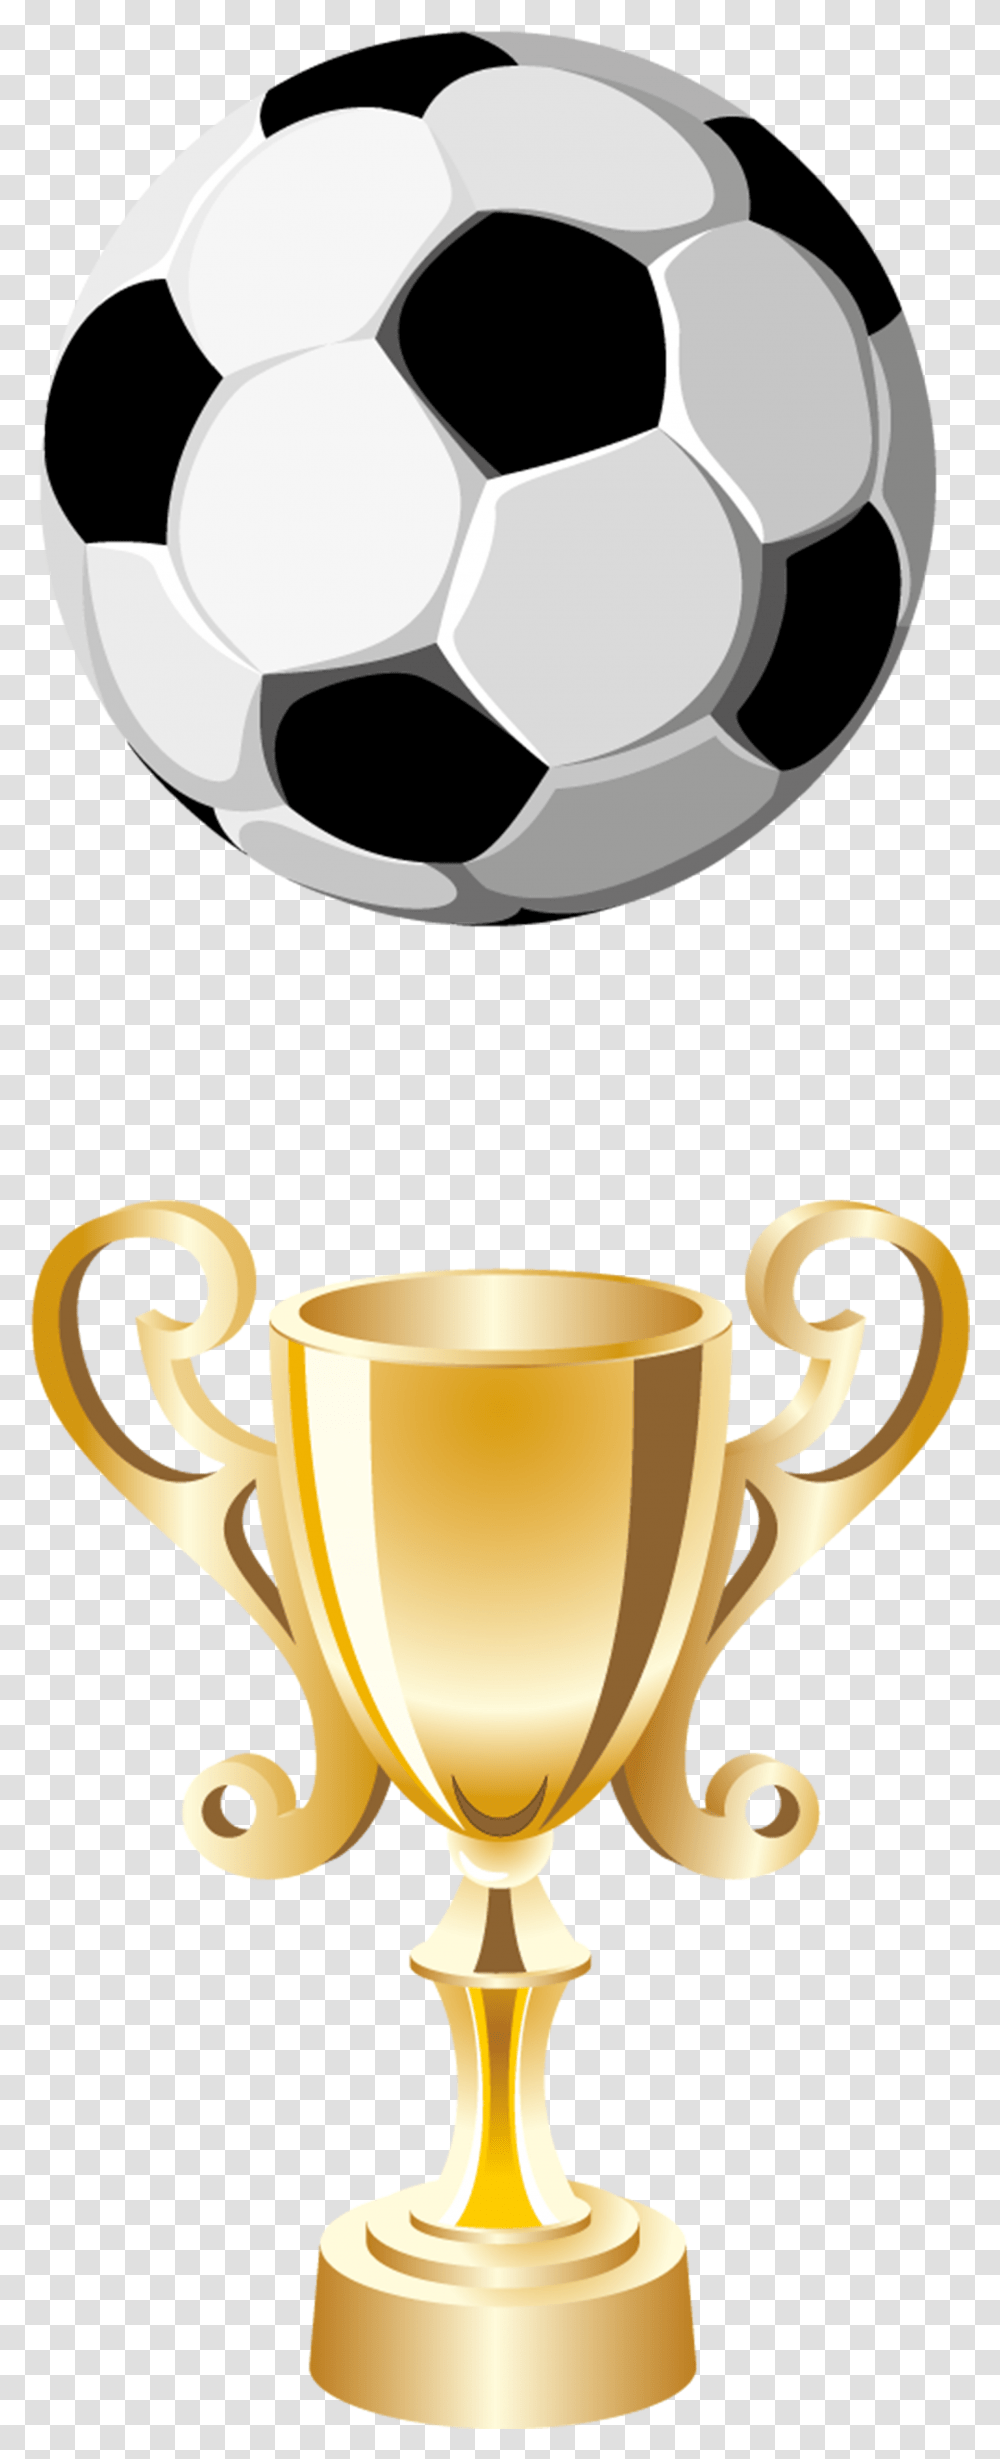 Fifa World Cup Concacaf Gold Cup Football Imagenes De Futbol Caricatura, Soccer Ball, Team Sport, Sports, Lamp Transparent Png